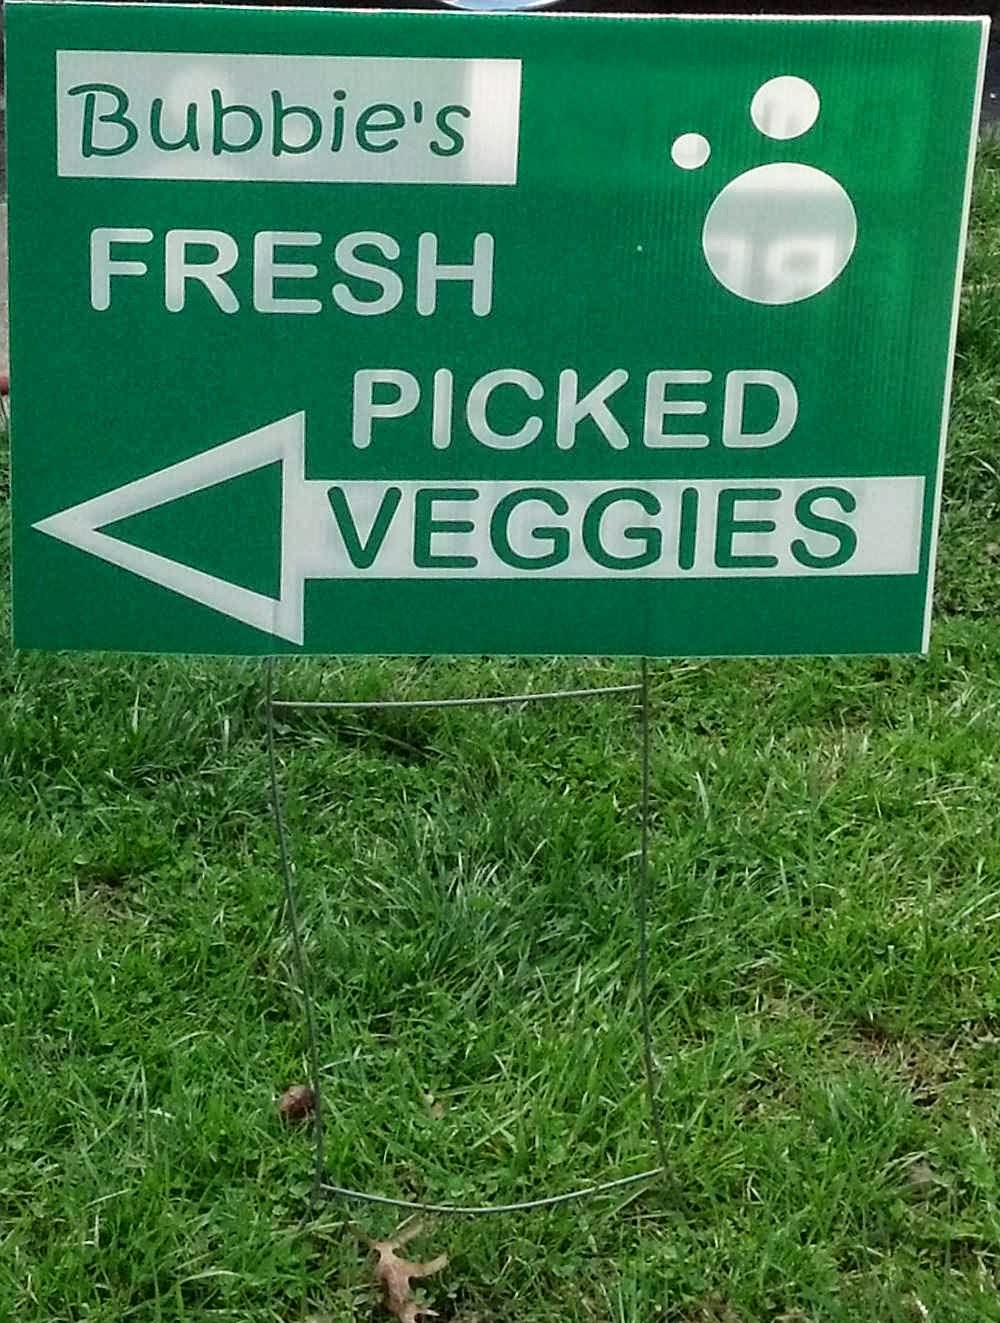 Bubbies Fresh Picked Veggies | 1 Moran Dr, Columbus, NJ 08022 | Phone: (609) 752-2105